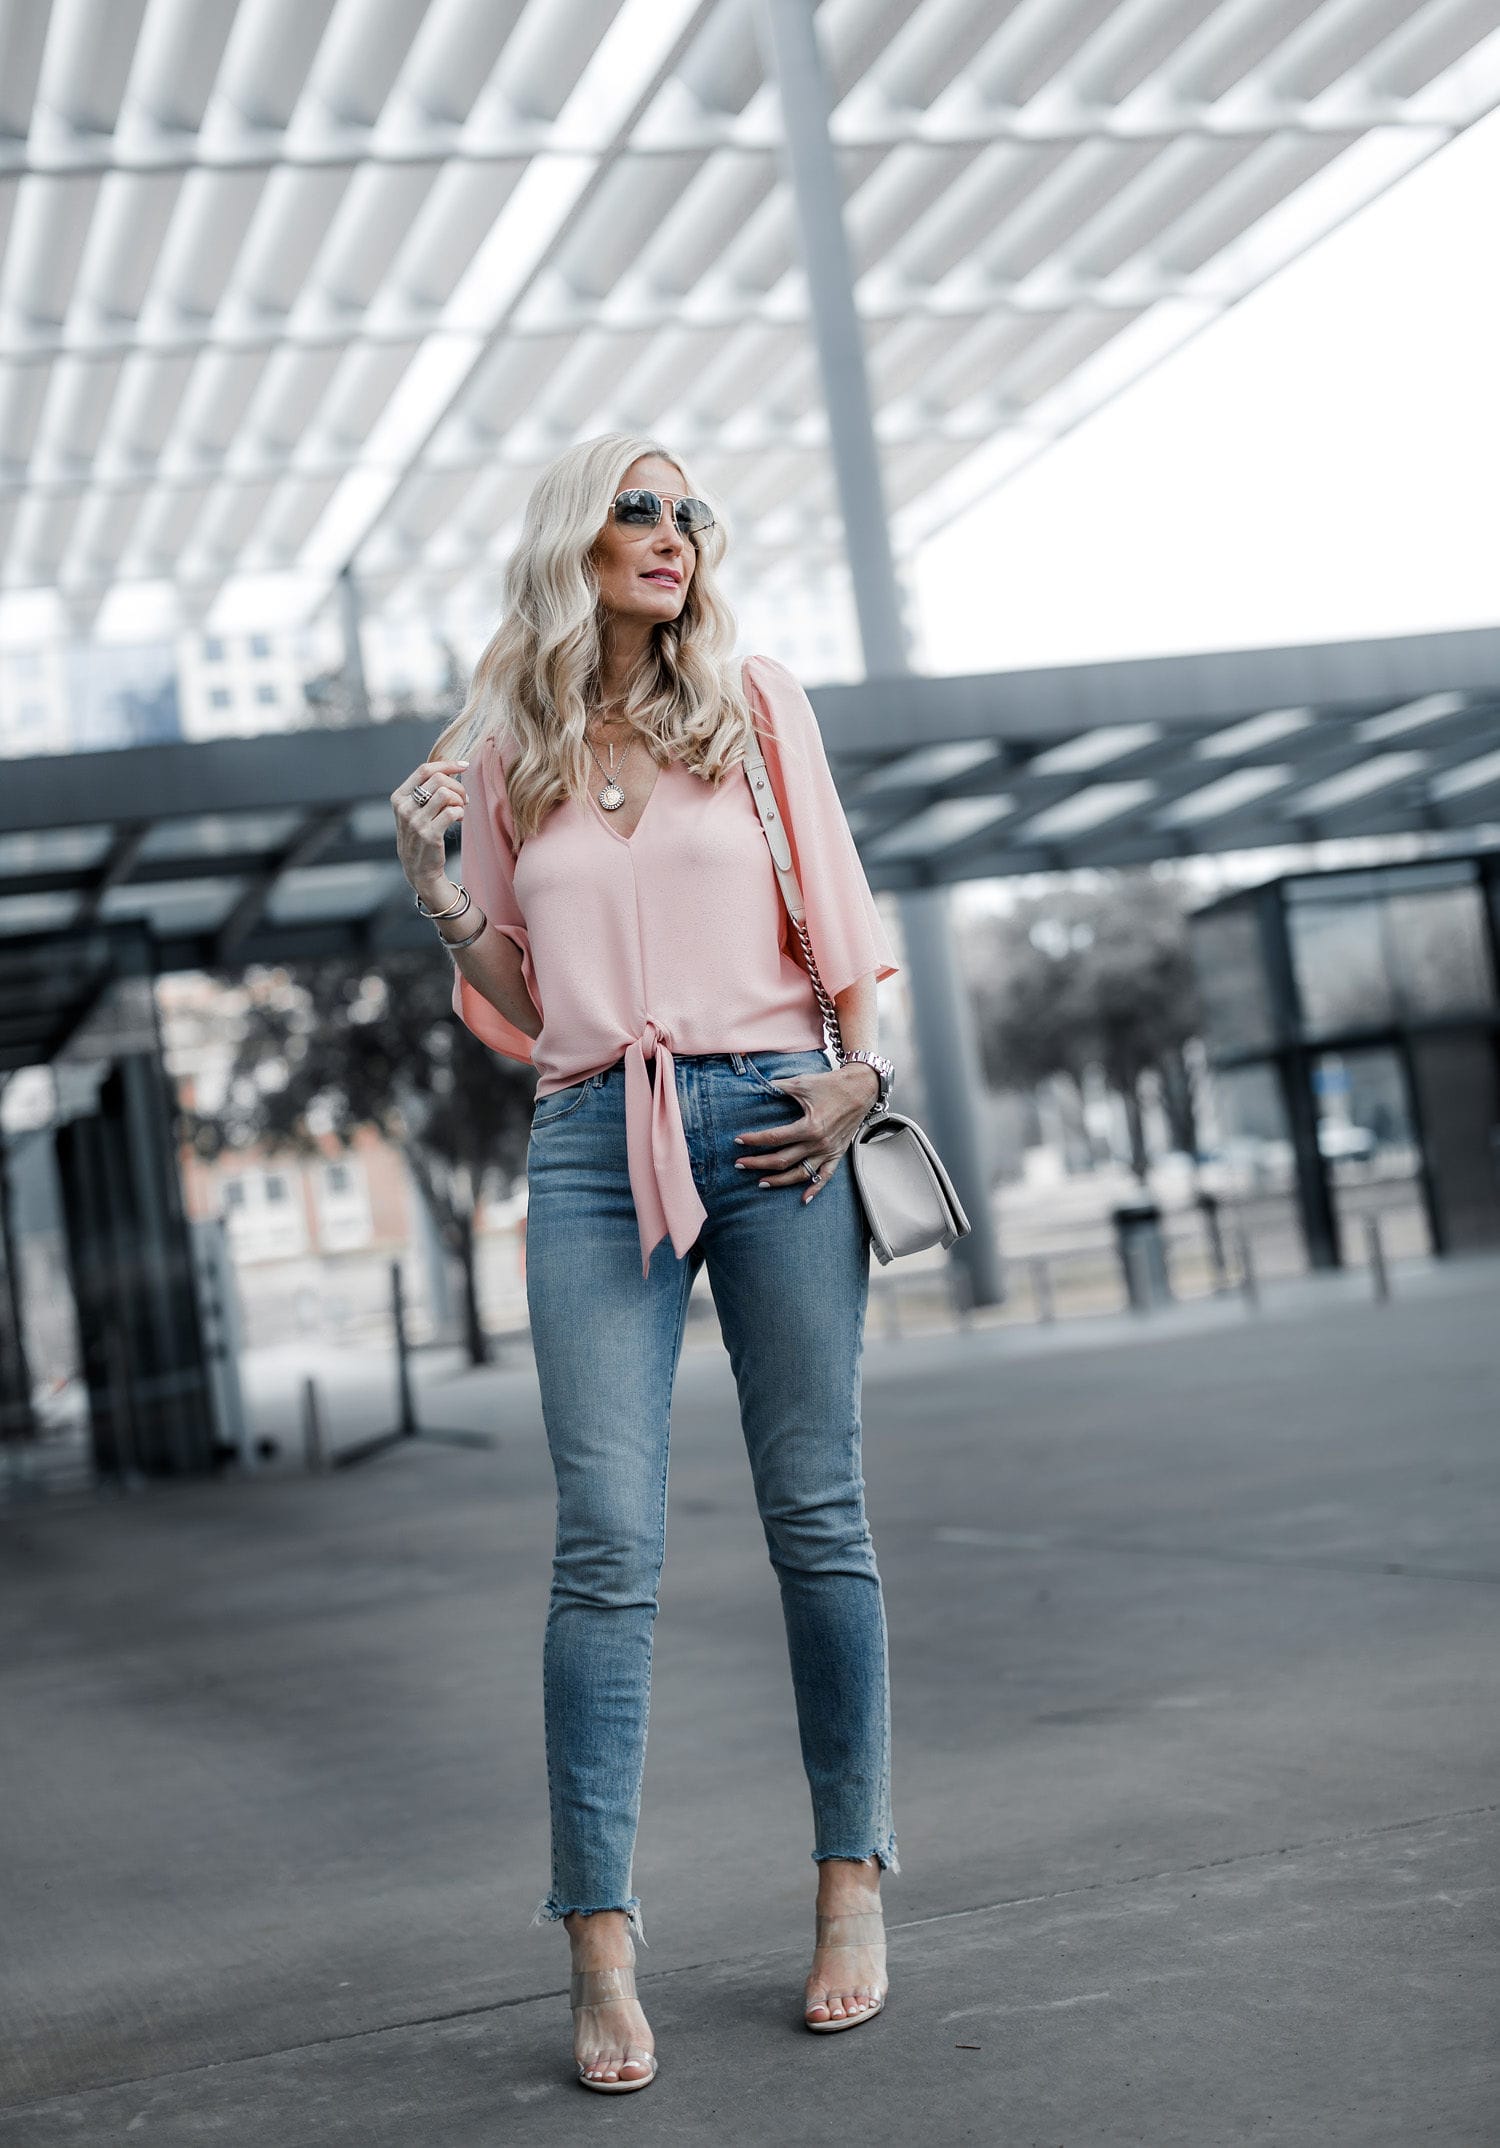 TOP 3 BEST JEANS - So Heather | Dallas Fashion Blogger